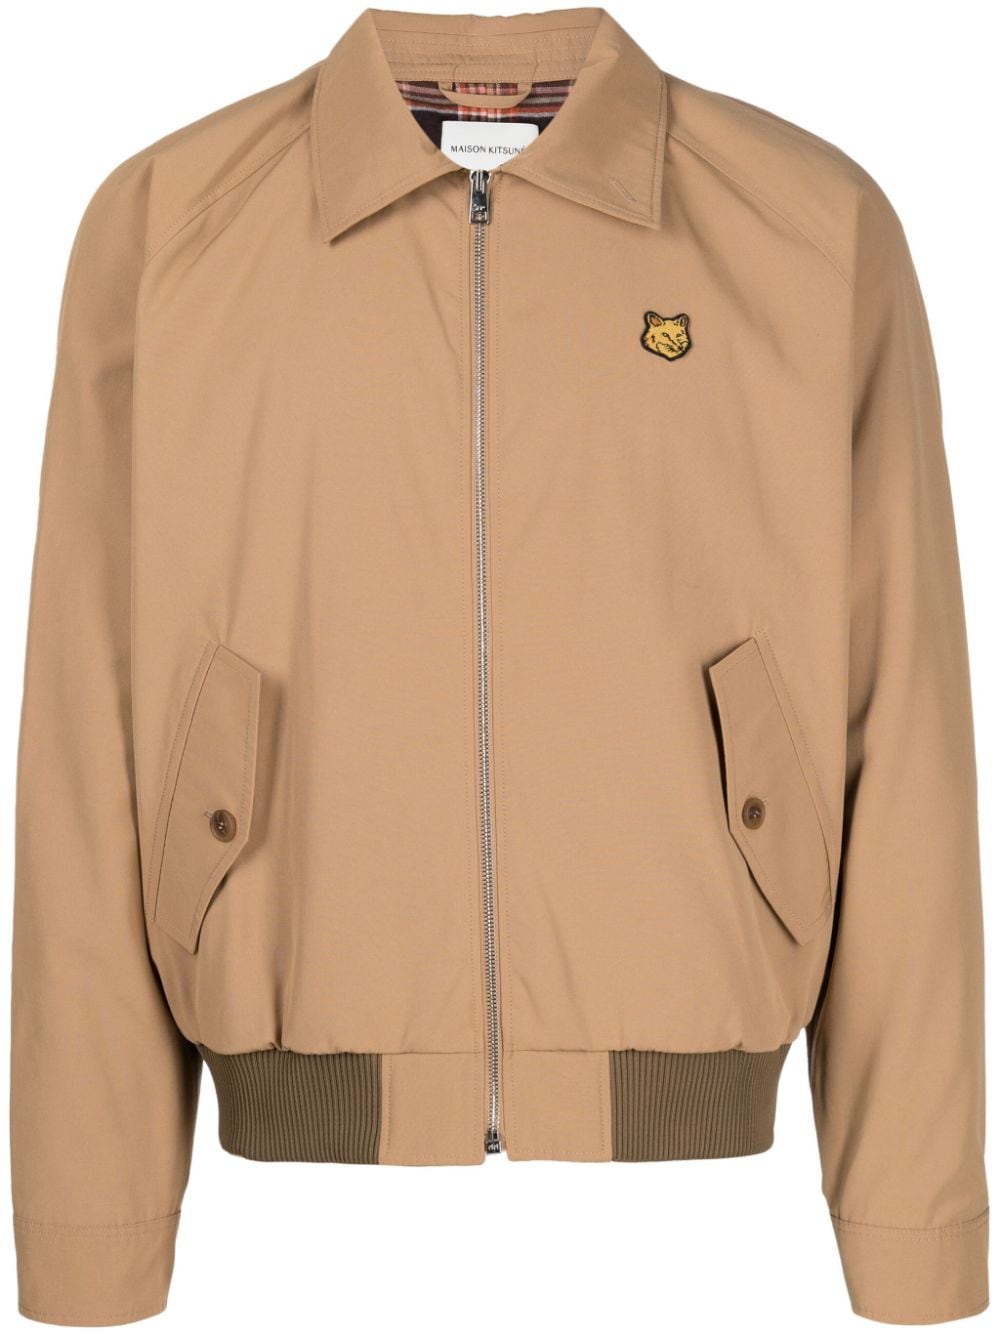 Harrington Jacket In Technical Cotton Gabardine With Bold Fox Head Patch